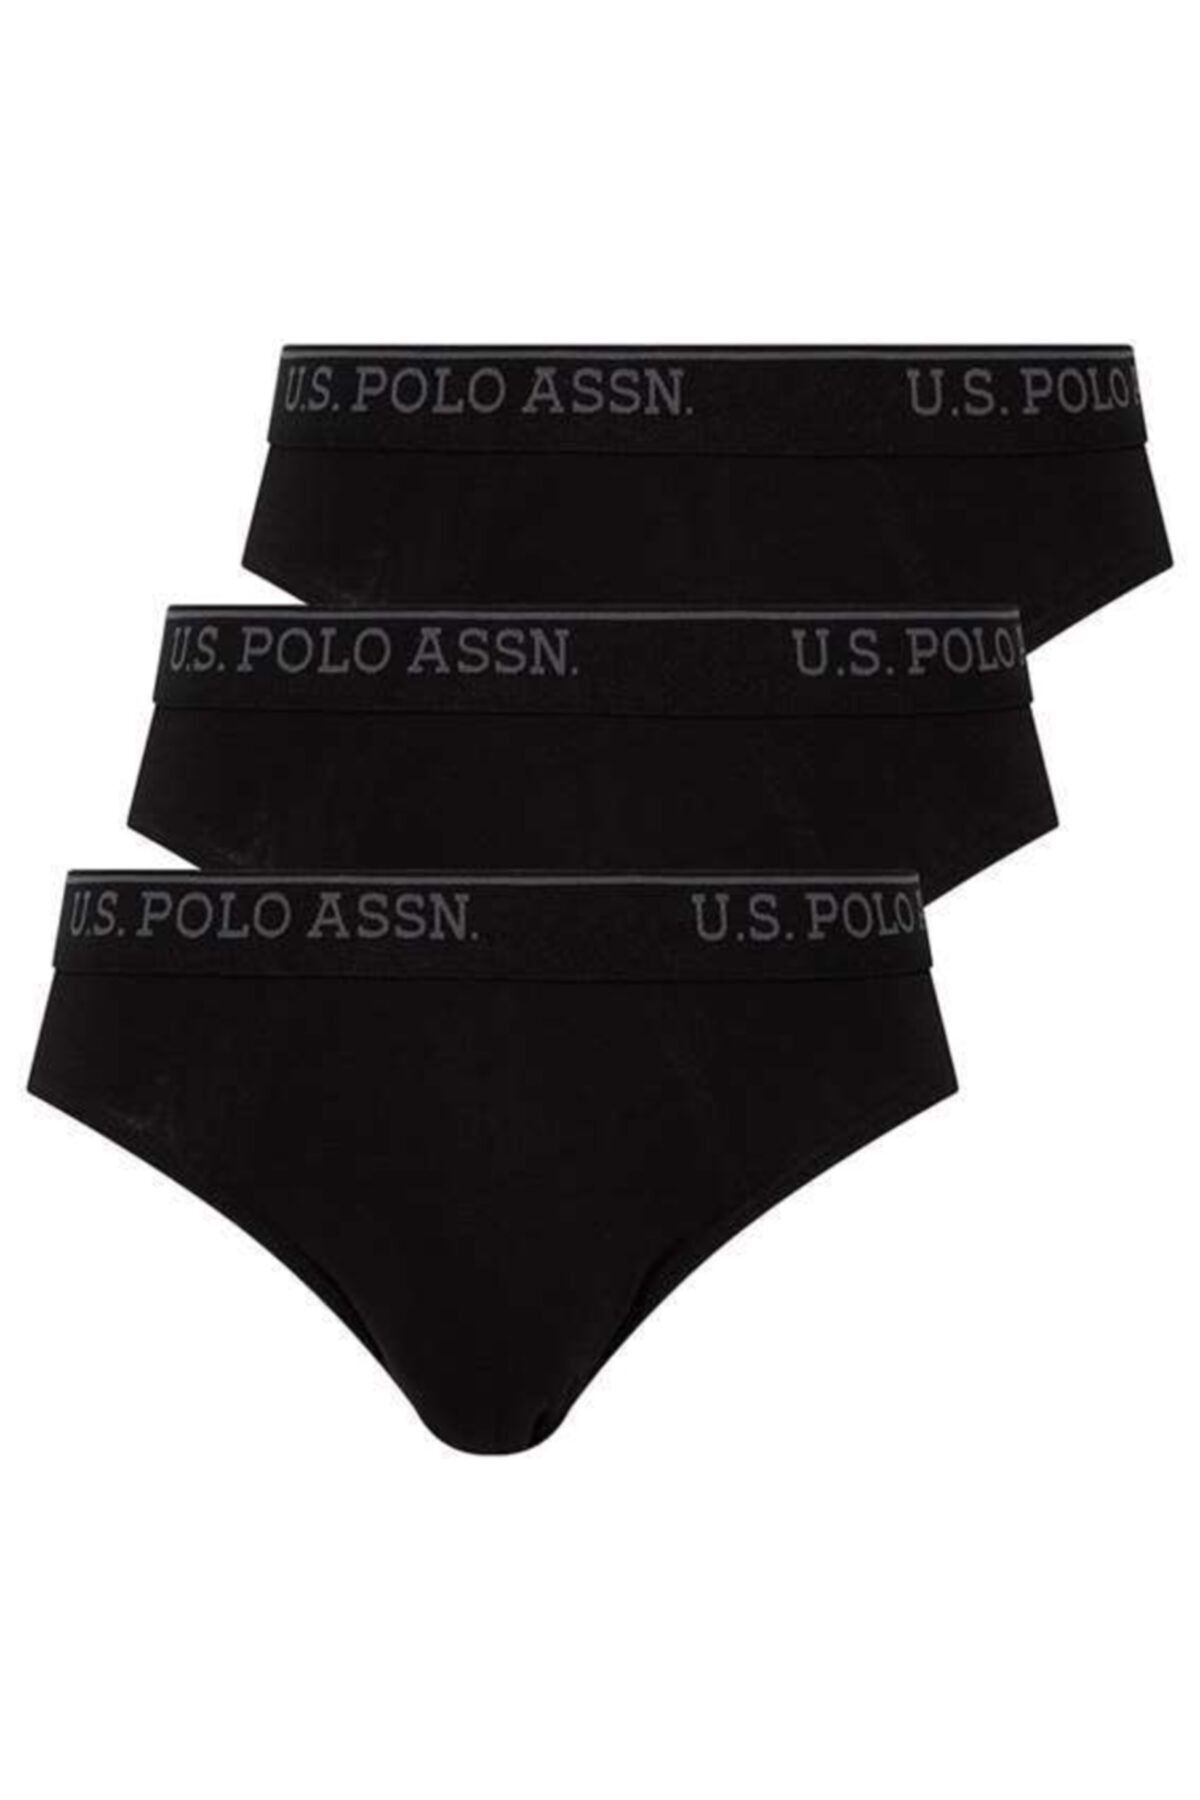 U.S. Polo Assn. Men's Triple Slip Black Briefs - Trendyol